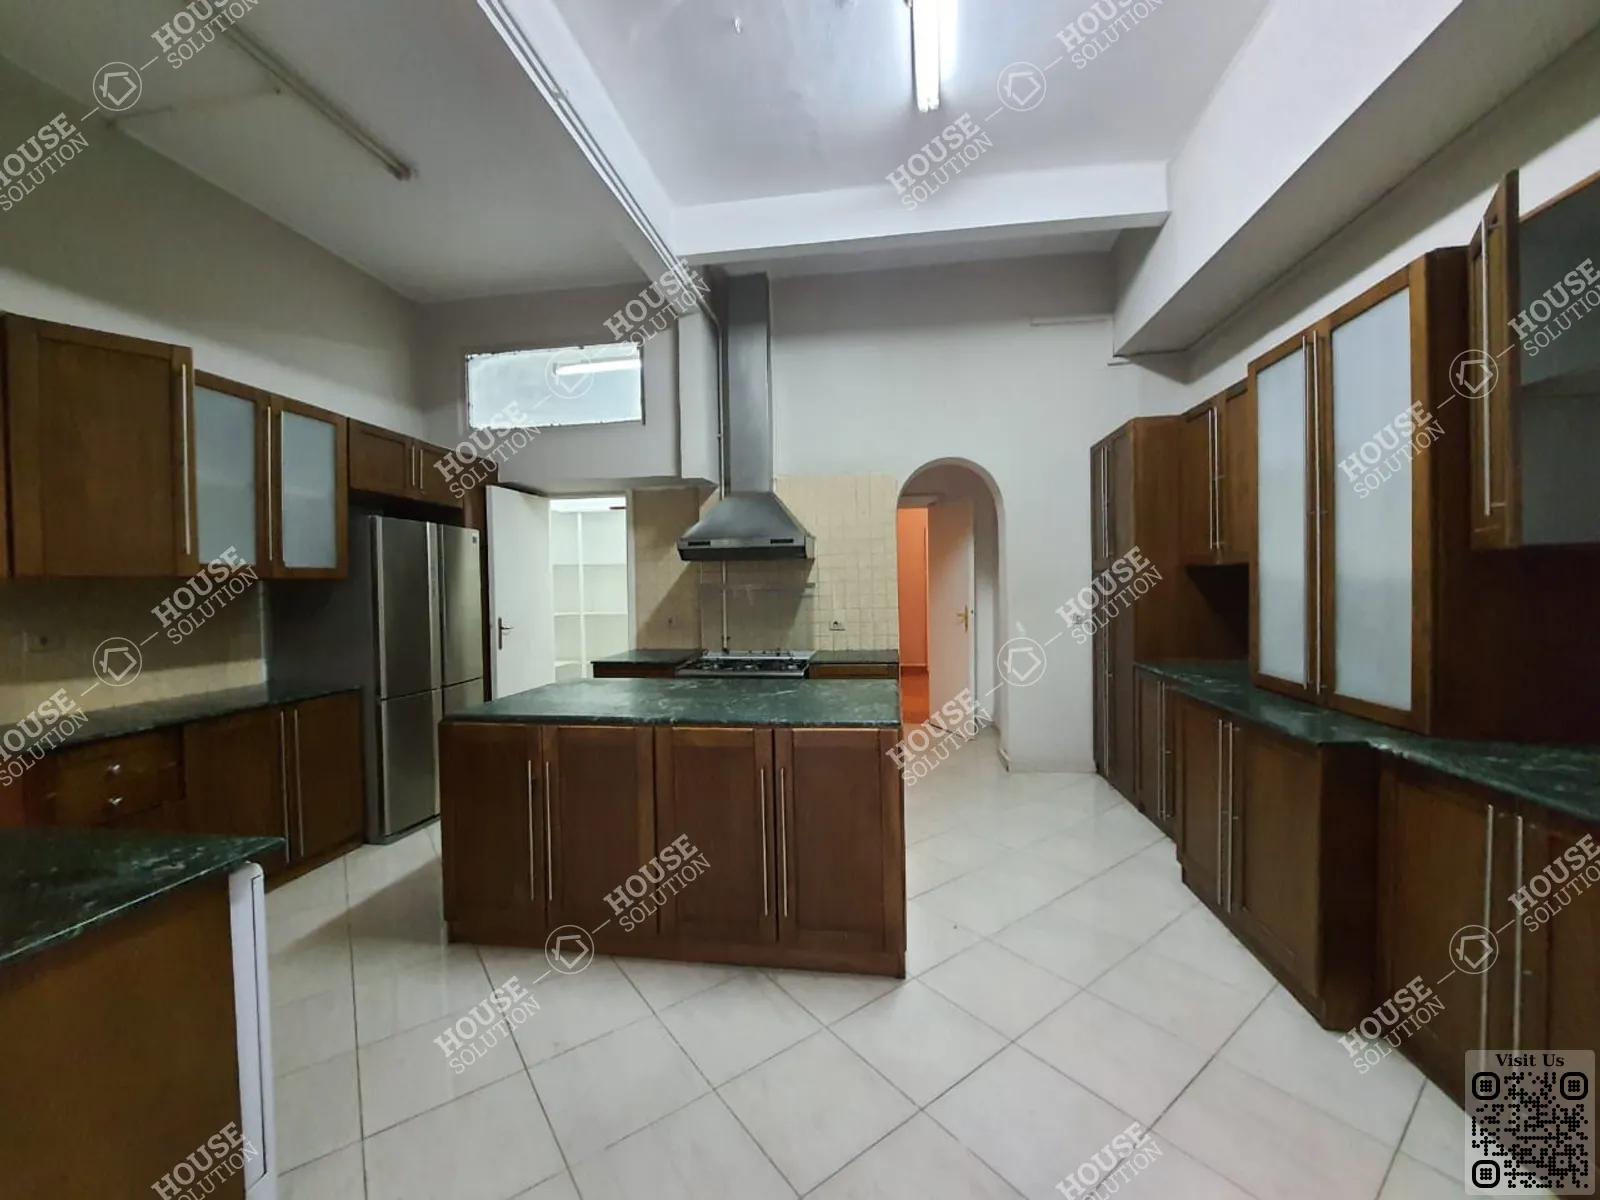 KITCHEN  @ Villas For Rent In Maadi Maadi Sarayat Area: 1050 m² consists of 4 Bedrooms 4 Bathrooms Semi furnished 5 stars #4853-2